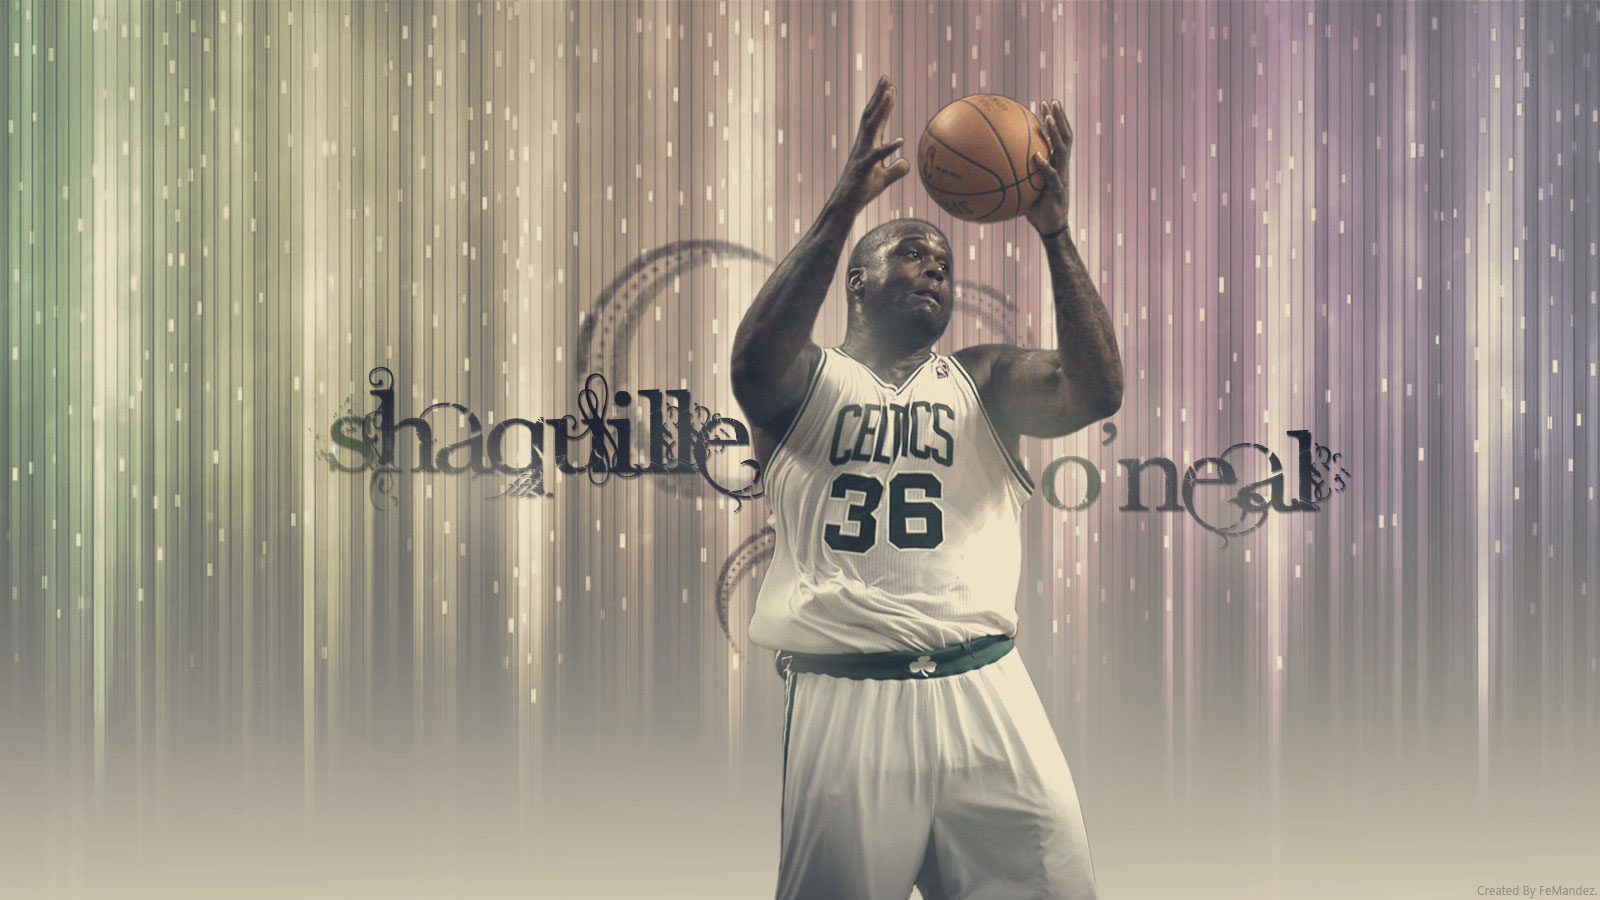 Shaquille O’Neal Celtics 2011 Widescreen Wallpaper | Basketball Wallpapers at ...1600 x 900